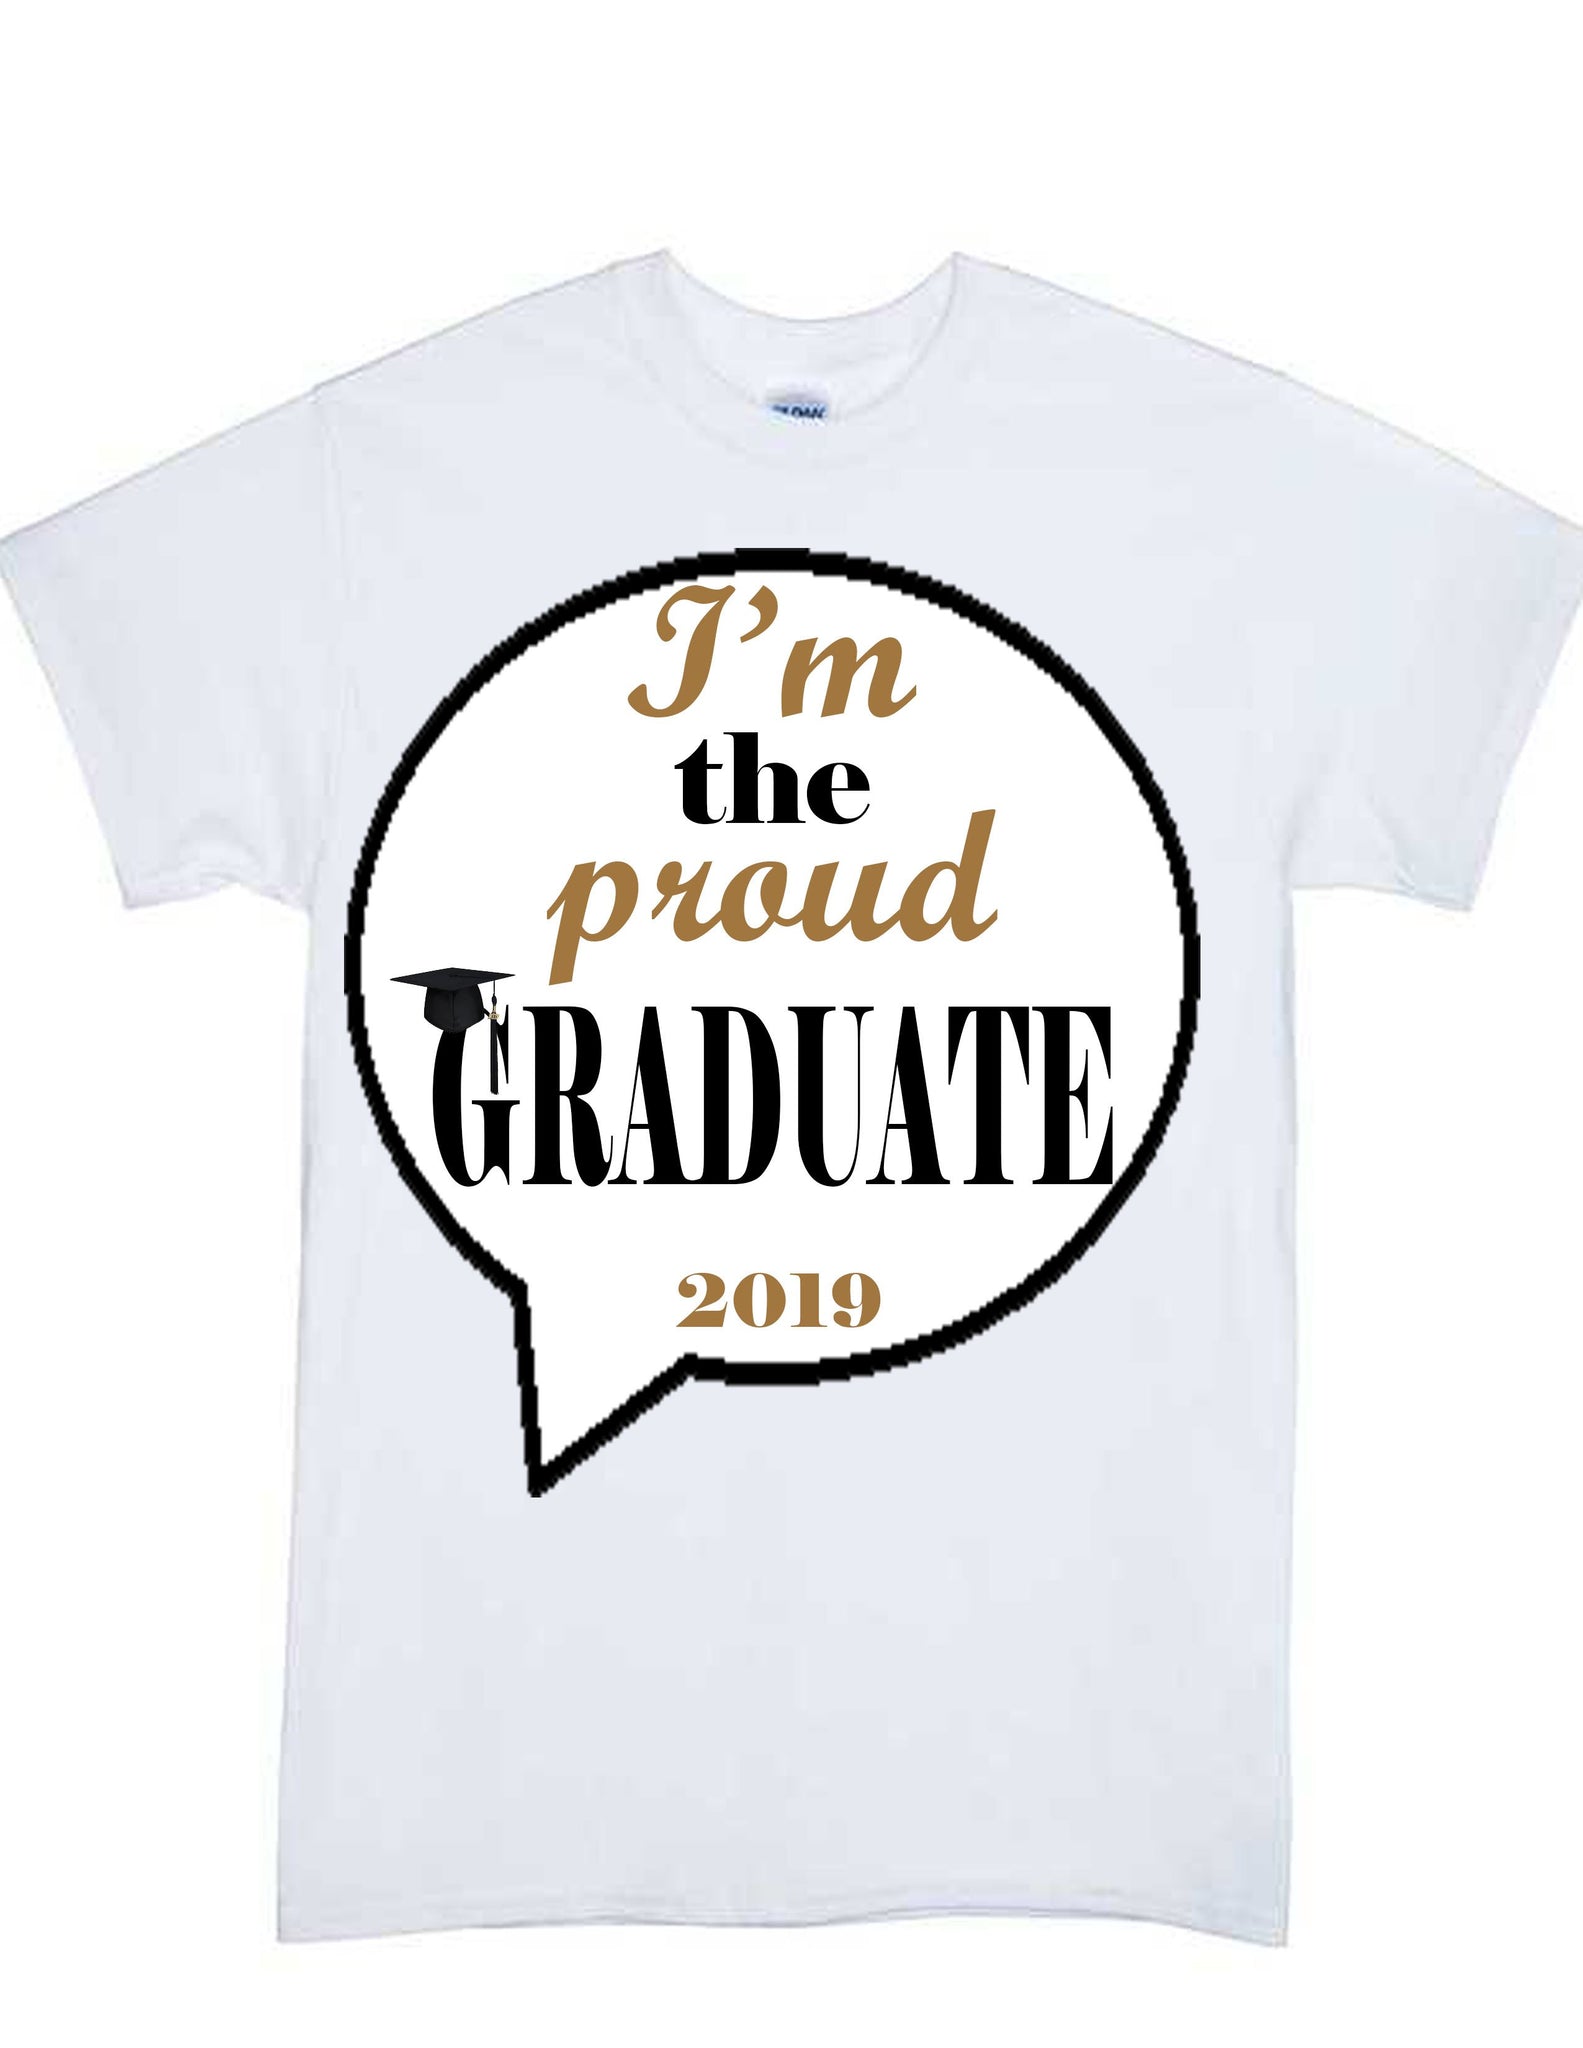 Proud Graduate of ....